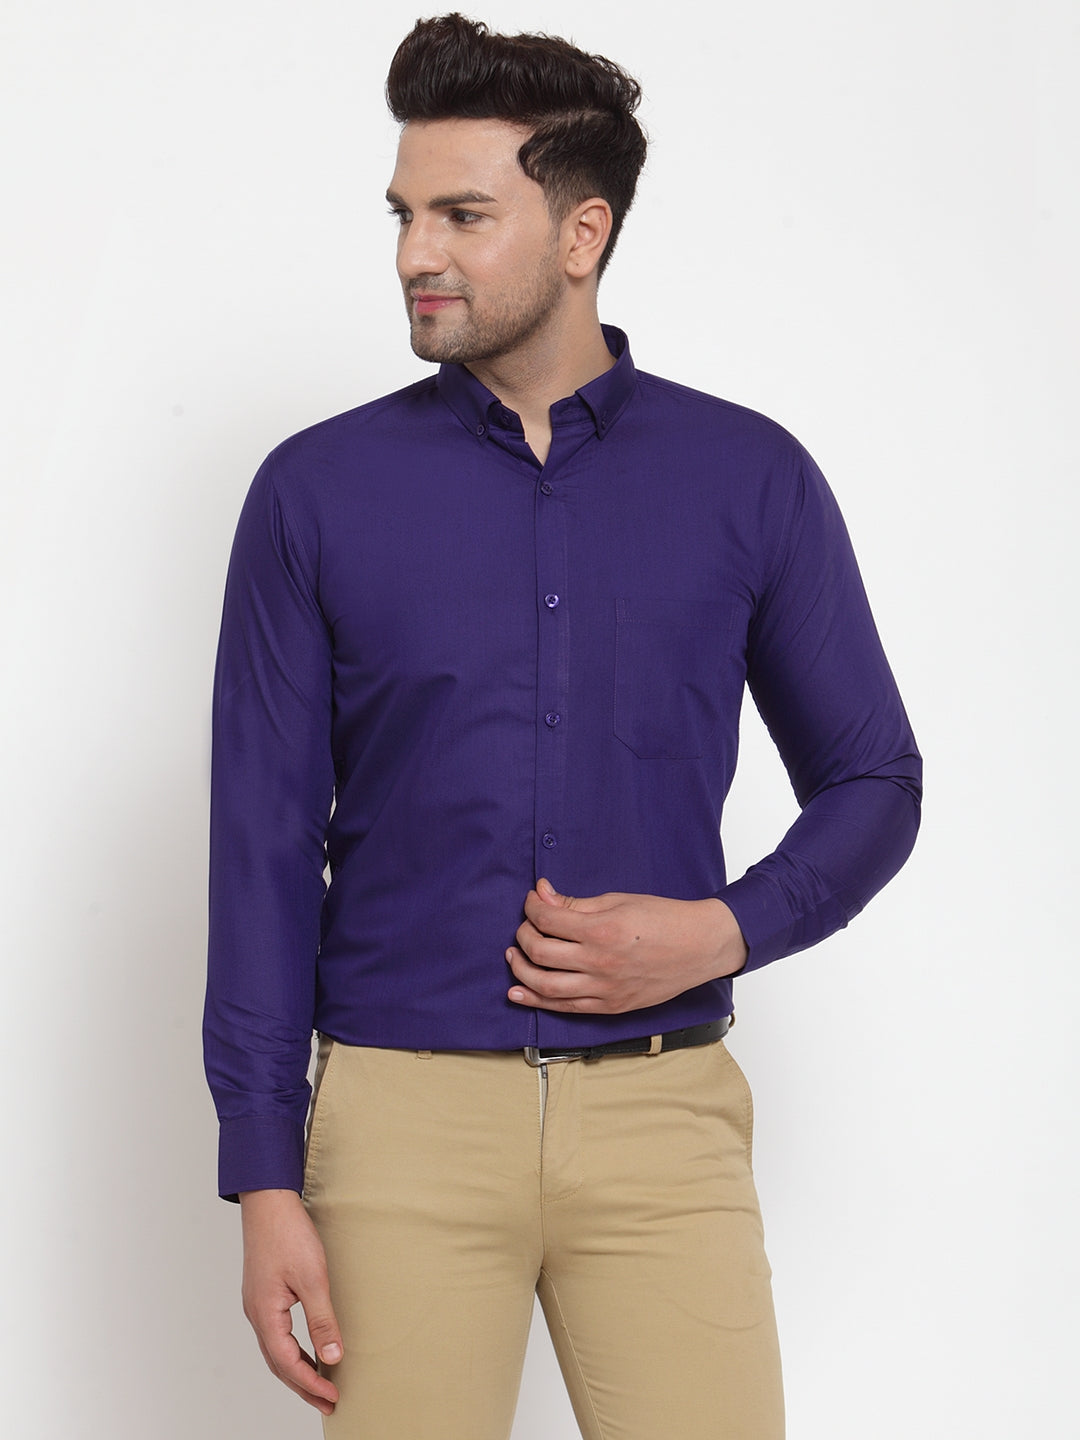 Men's Purple Cotton Solid Button Down Formal Shirts ( SF 713Purple ) - Jainish